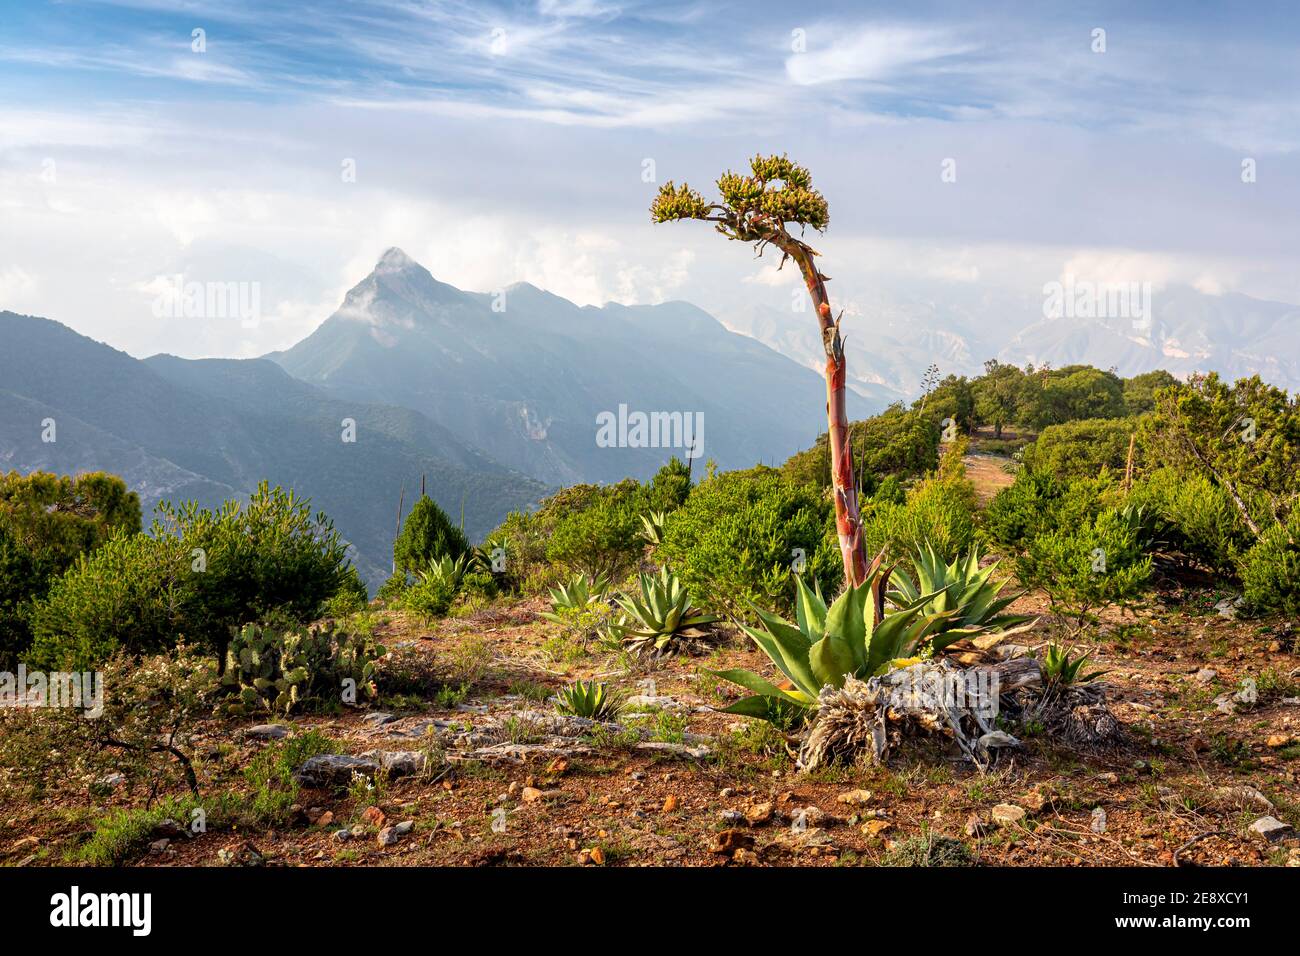 A Century plant (Agave americana) on a hillside in the Sierra Gorda mountains of Queretaro, Mexico. Stock Photo